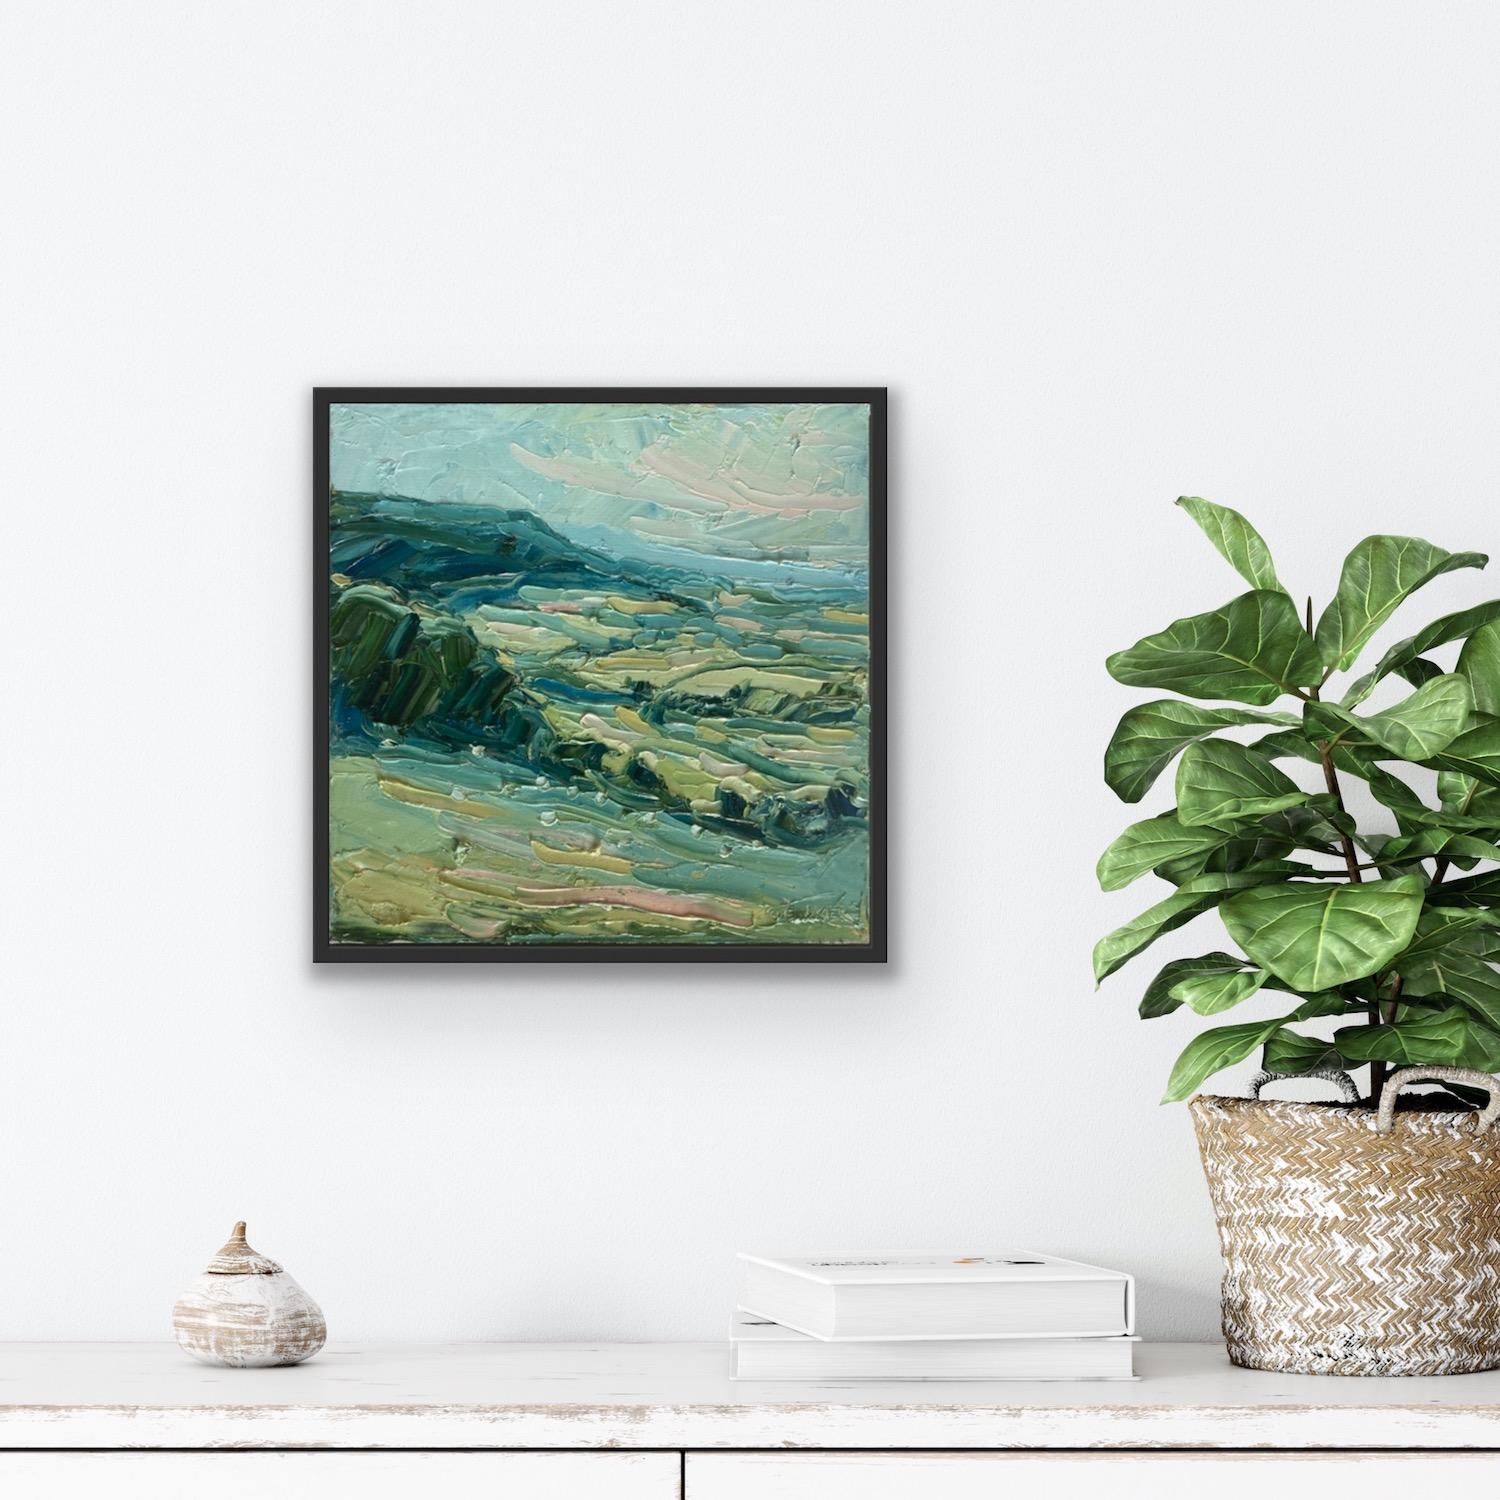 Stinchcombe Hill, Rupert Aker, Original painting, Impressionist style Landscape  For Sale 6